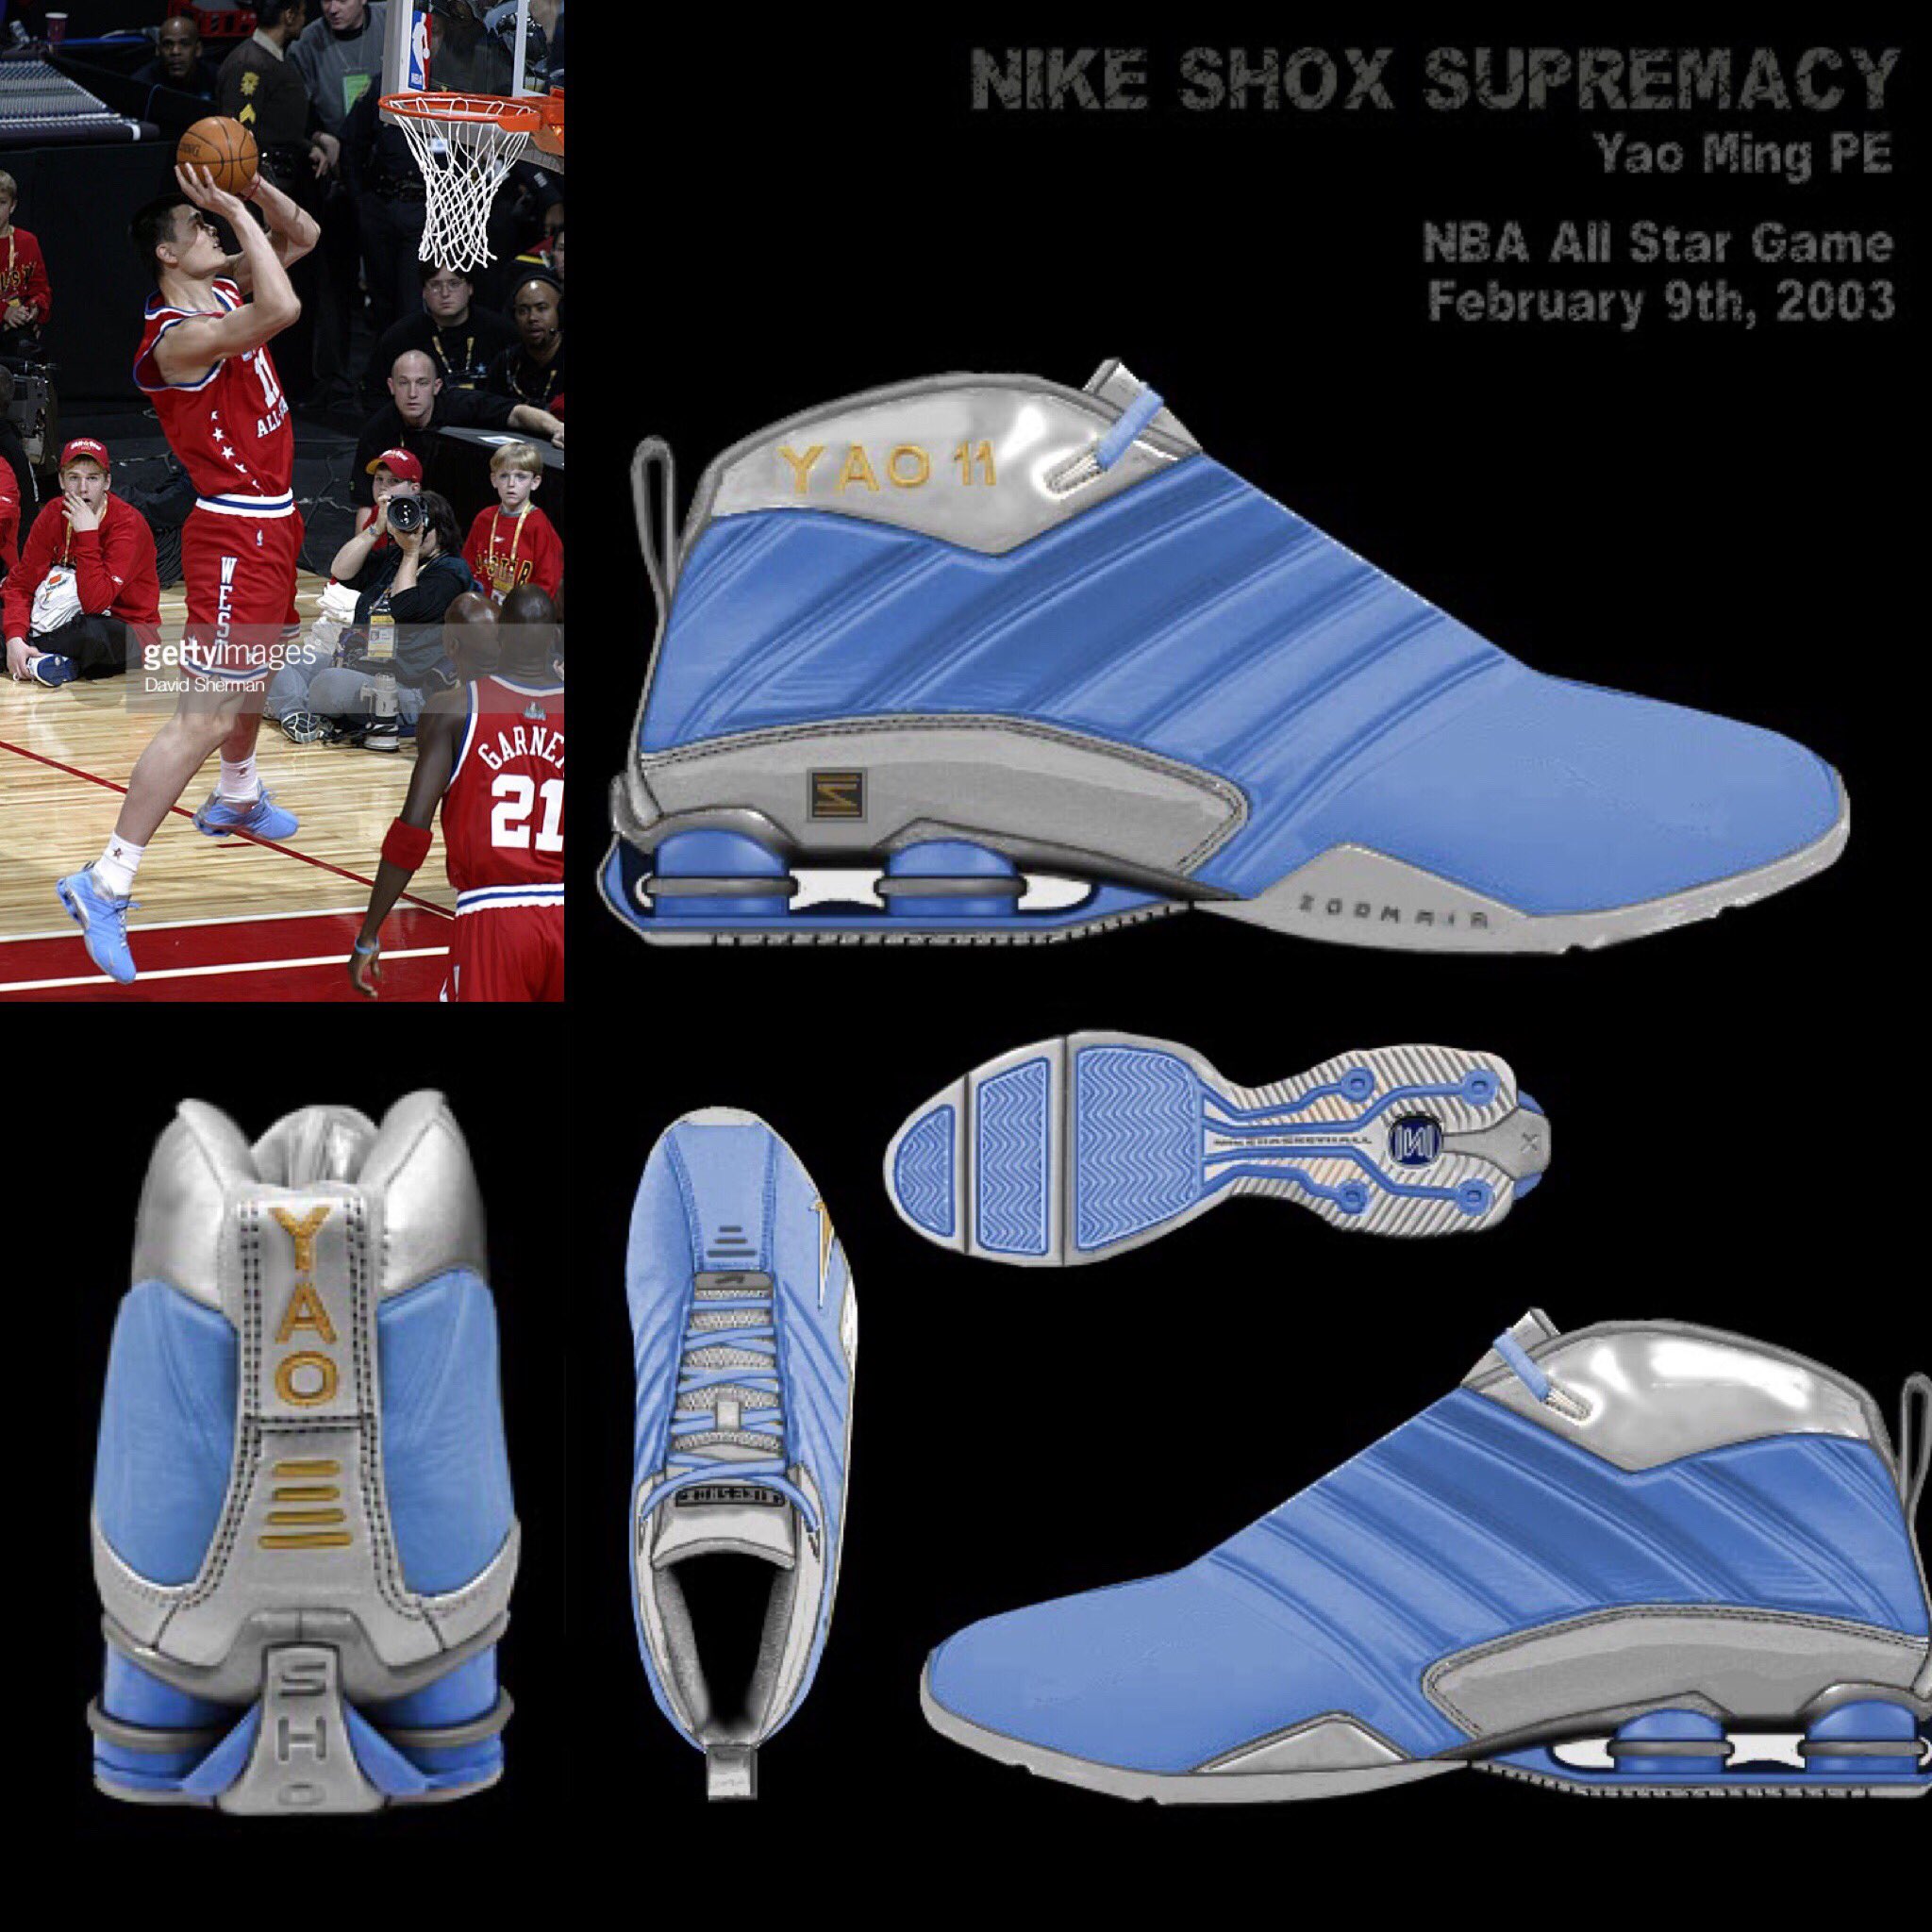 lana Circunferencia Desfavorable LA ZAPATIPEDIA on Twitter: "#Nike Shox Supremacy Yao Ming PE #AllStarGame  2003 https://t.co/OiGZflaWgk #shoes #kicks #nba #sneakers #vintage #China  #basketball #Baloncesto #Houston #Rockets #Tiempo de Playoffs  https://t.co/OVEFkoXkY2" / Twitter